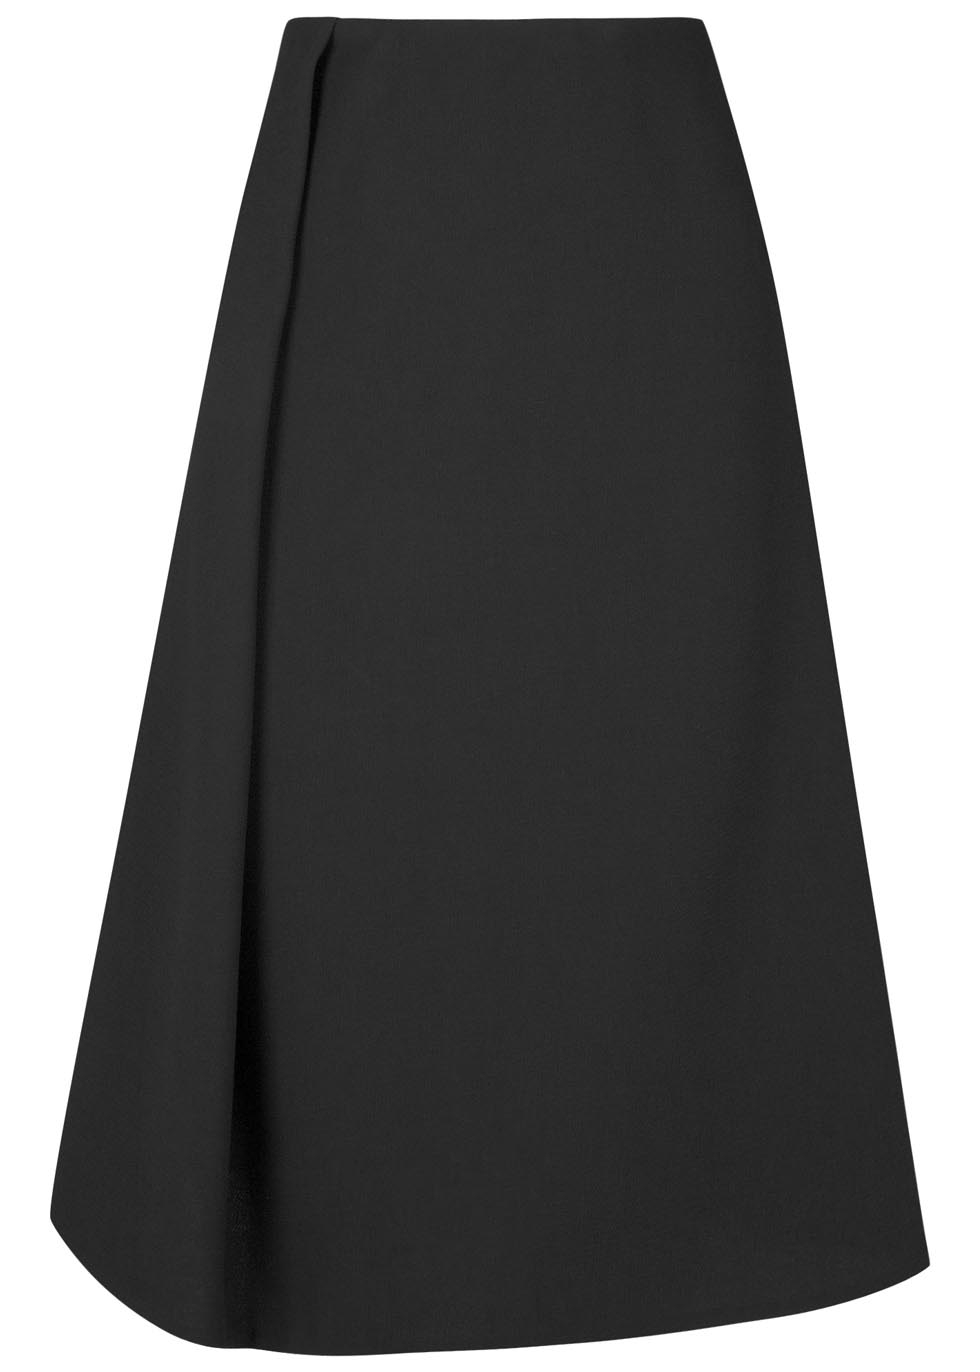 Black folded twill skirt